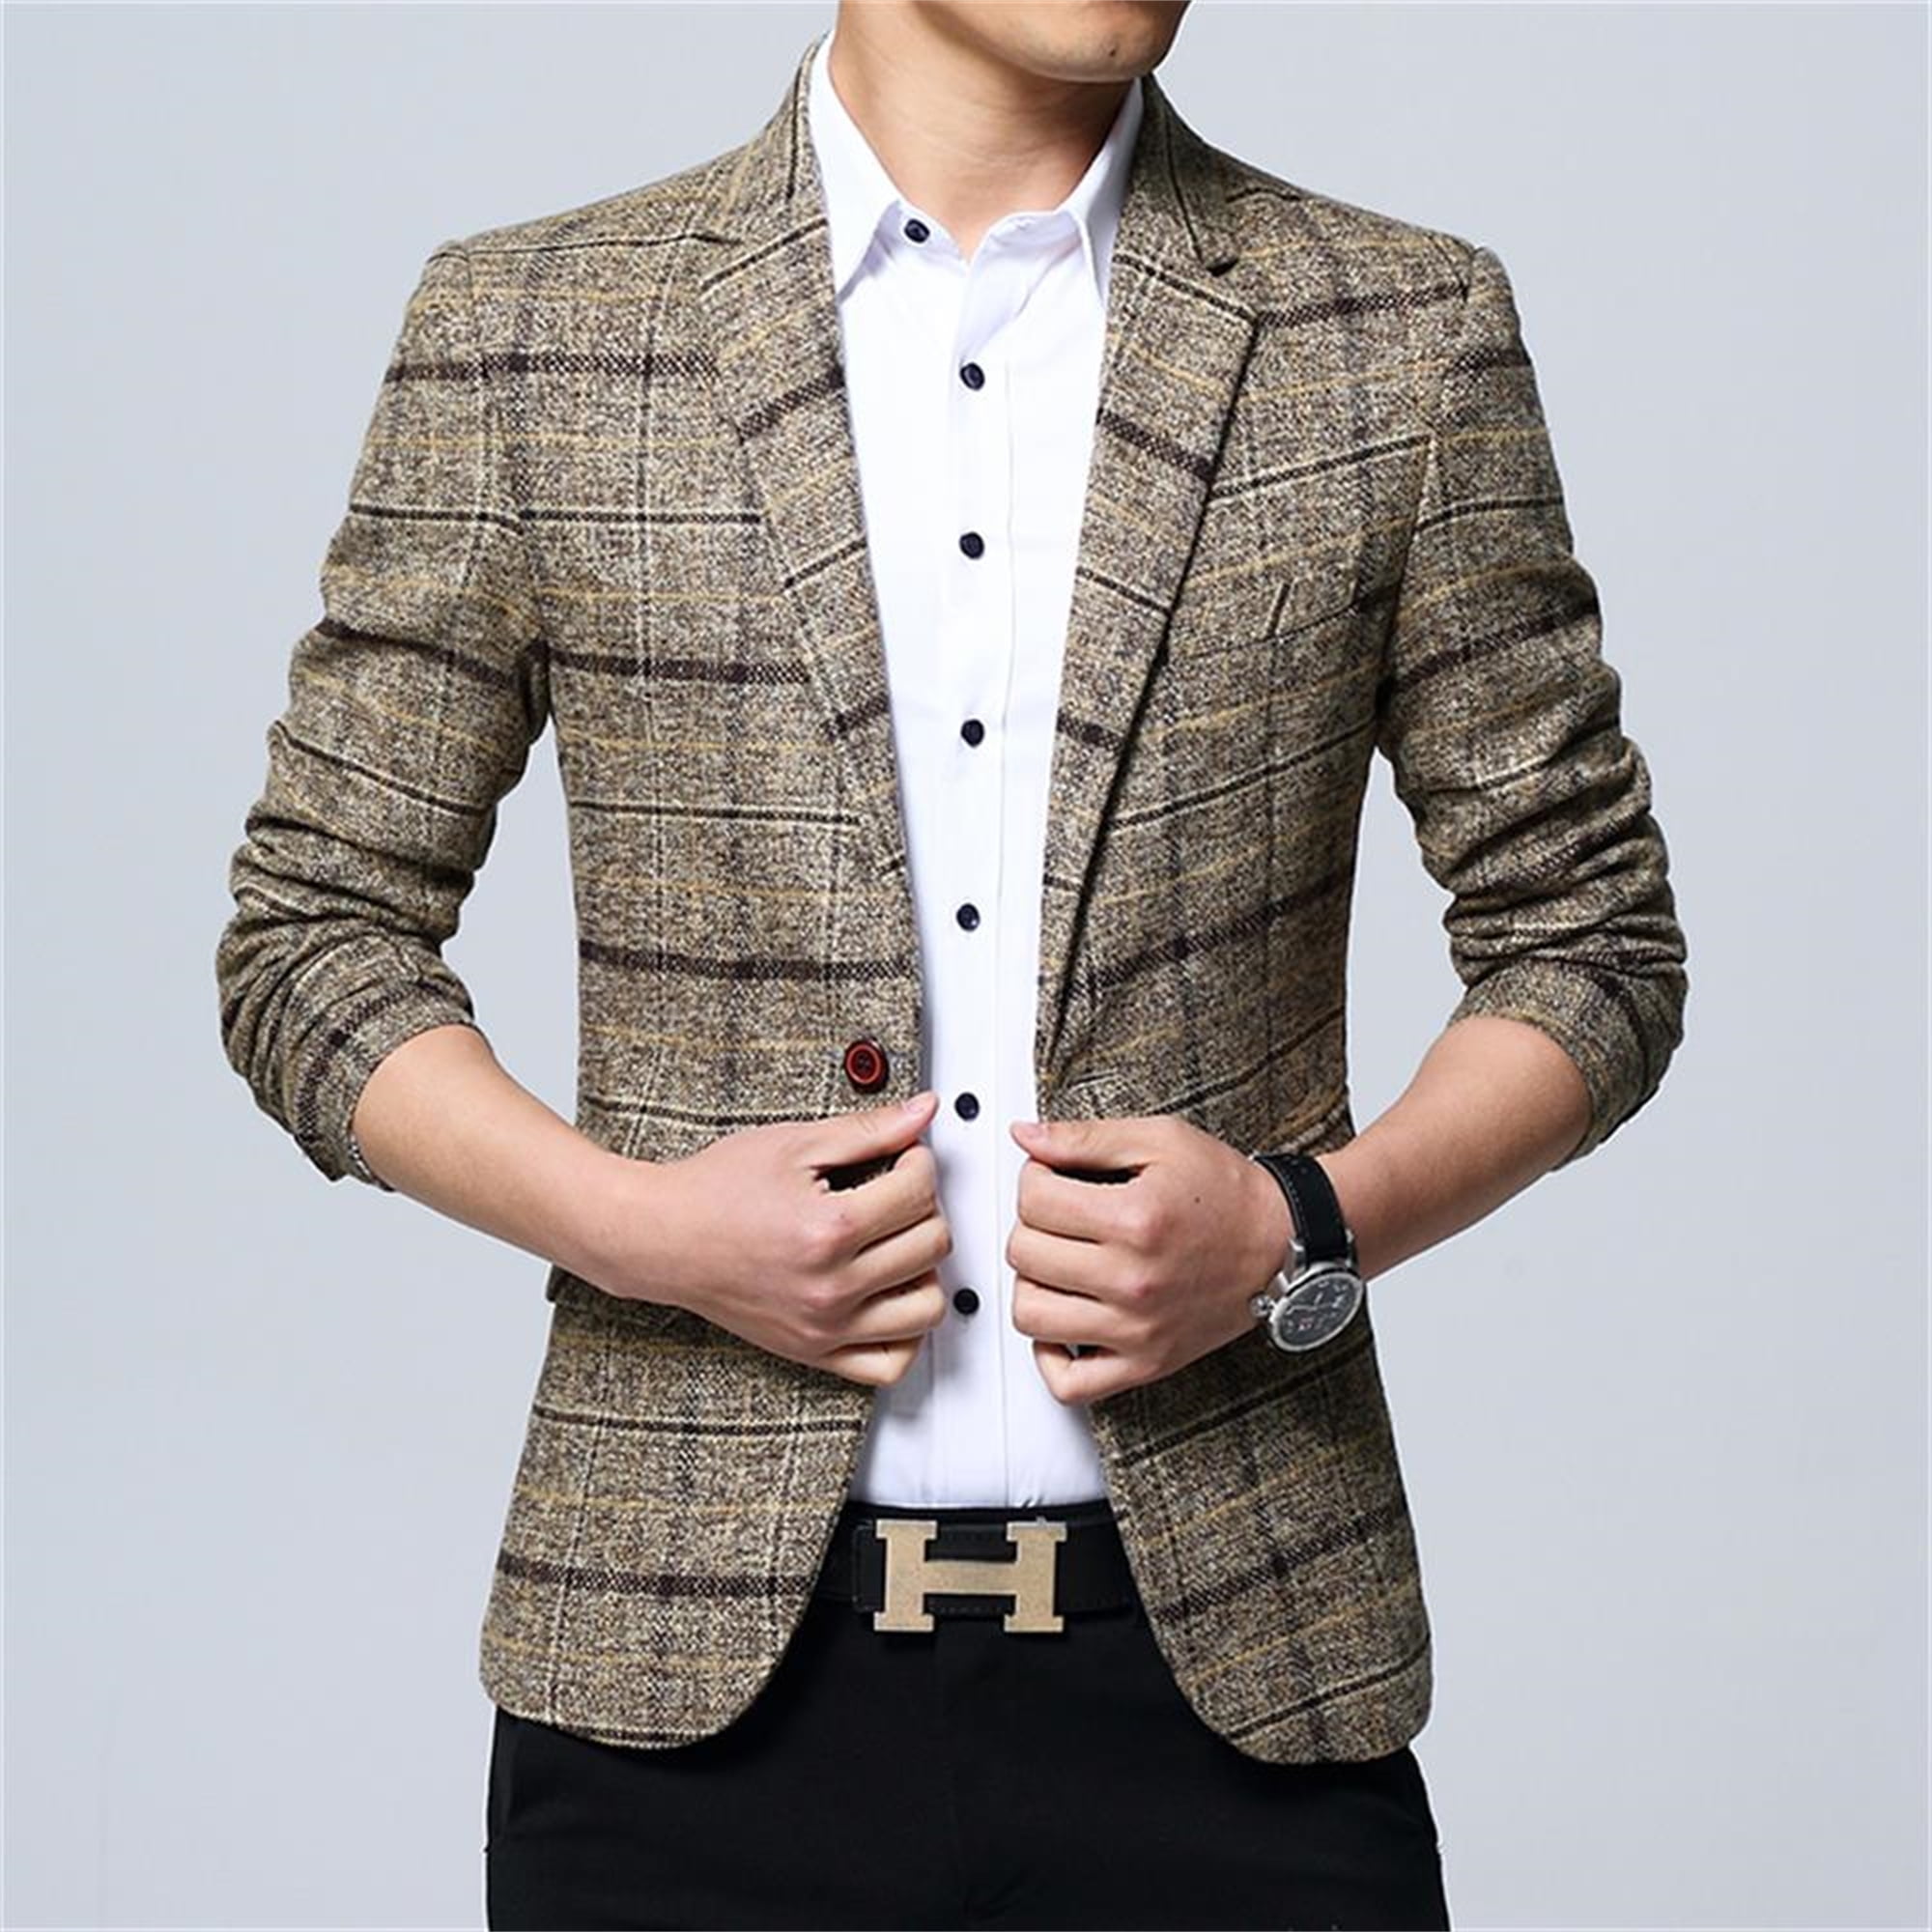 Fensajomon Men Plaid Print Casual Business Slim One Button Dress Blazer Jacket Sport Coat